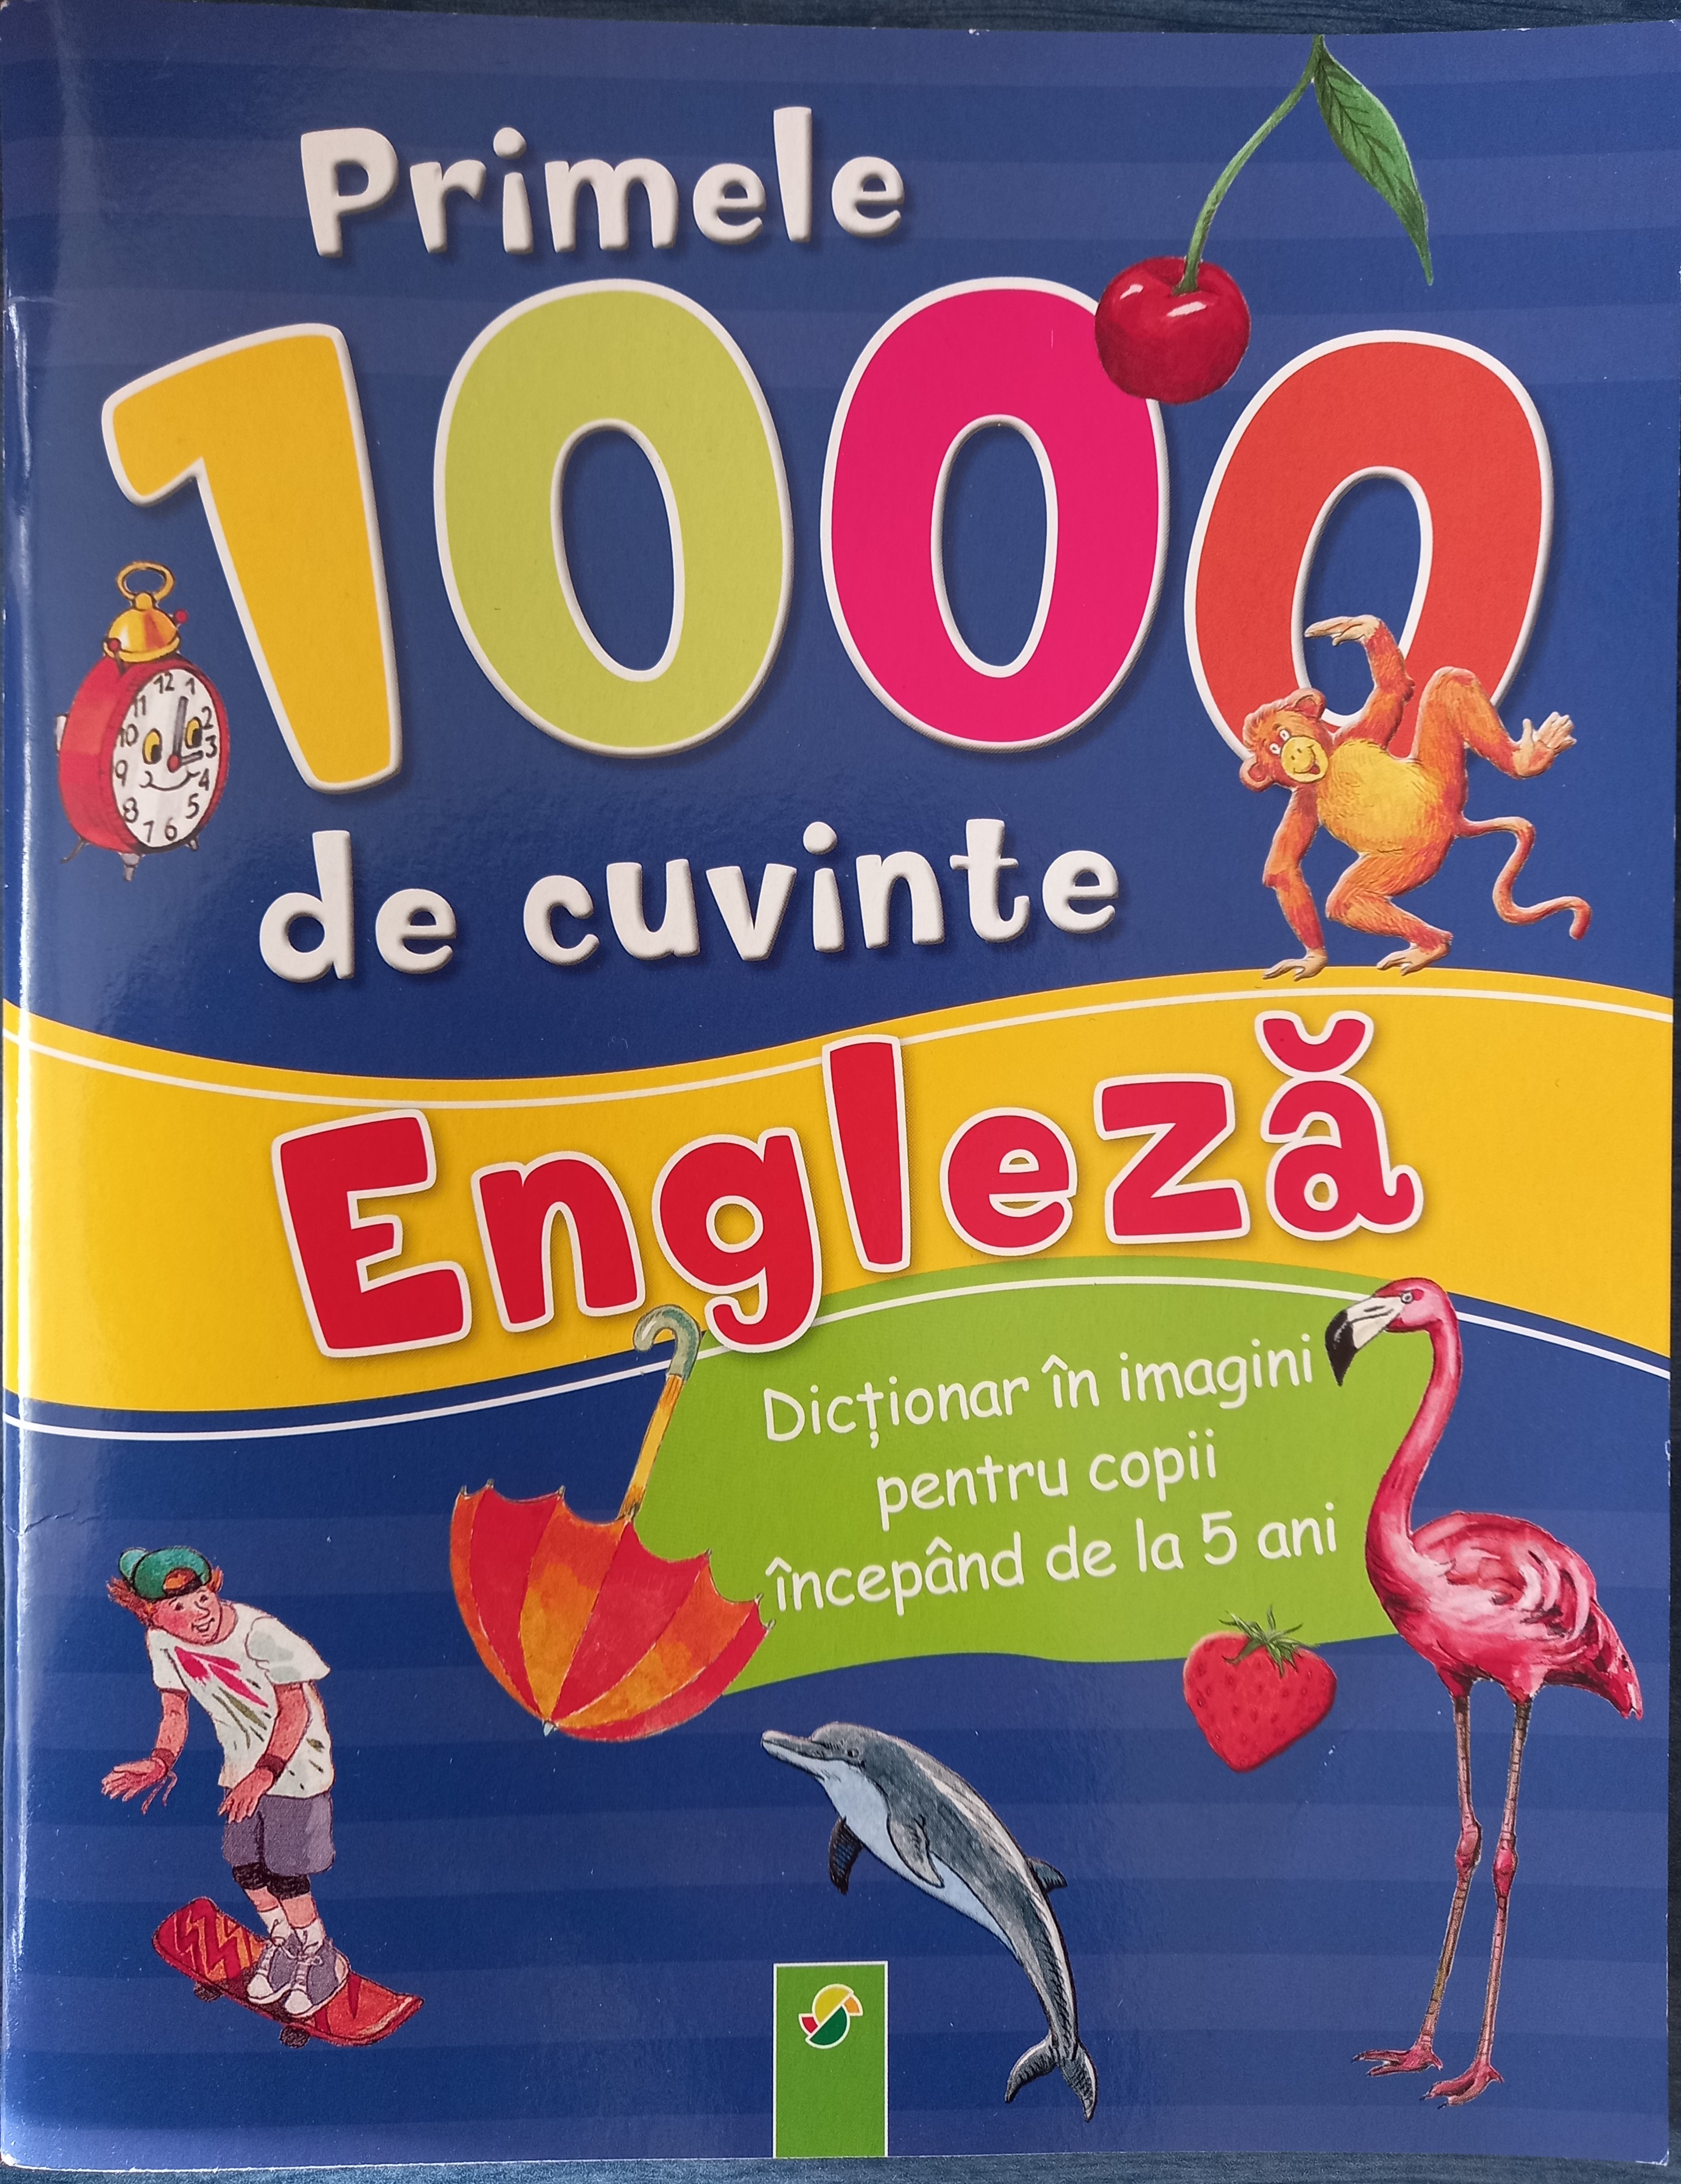 Primele 1000 cuvinte in engleza